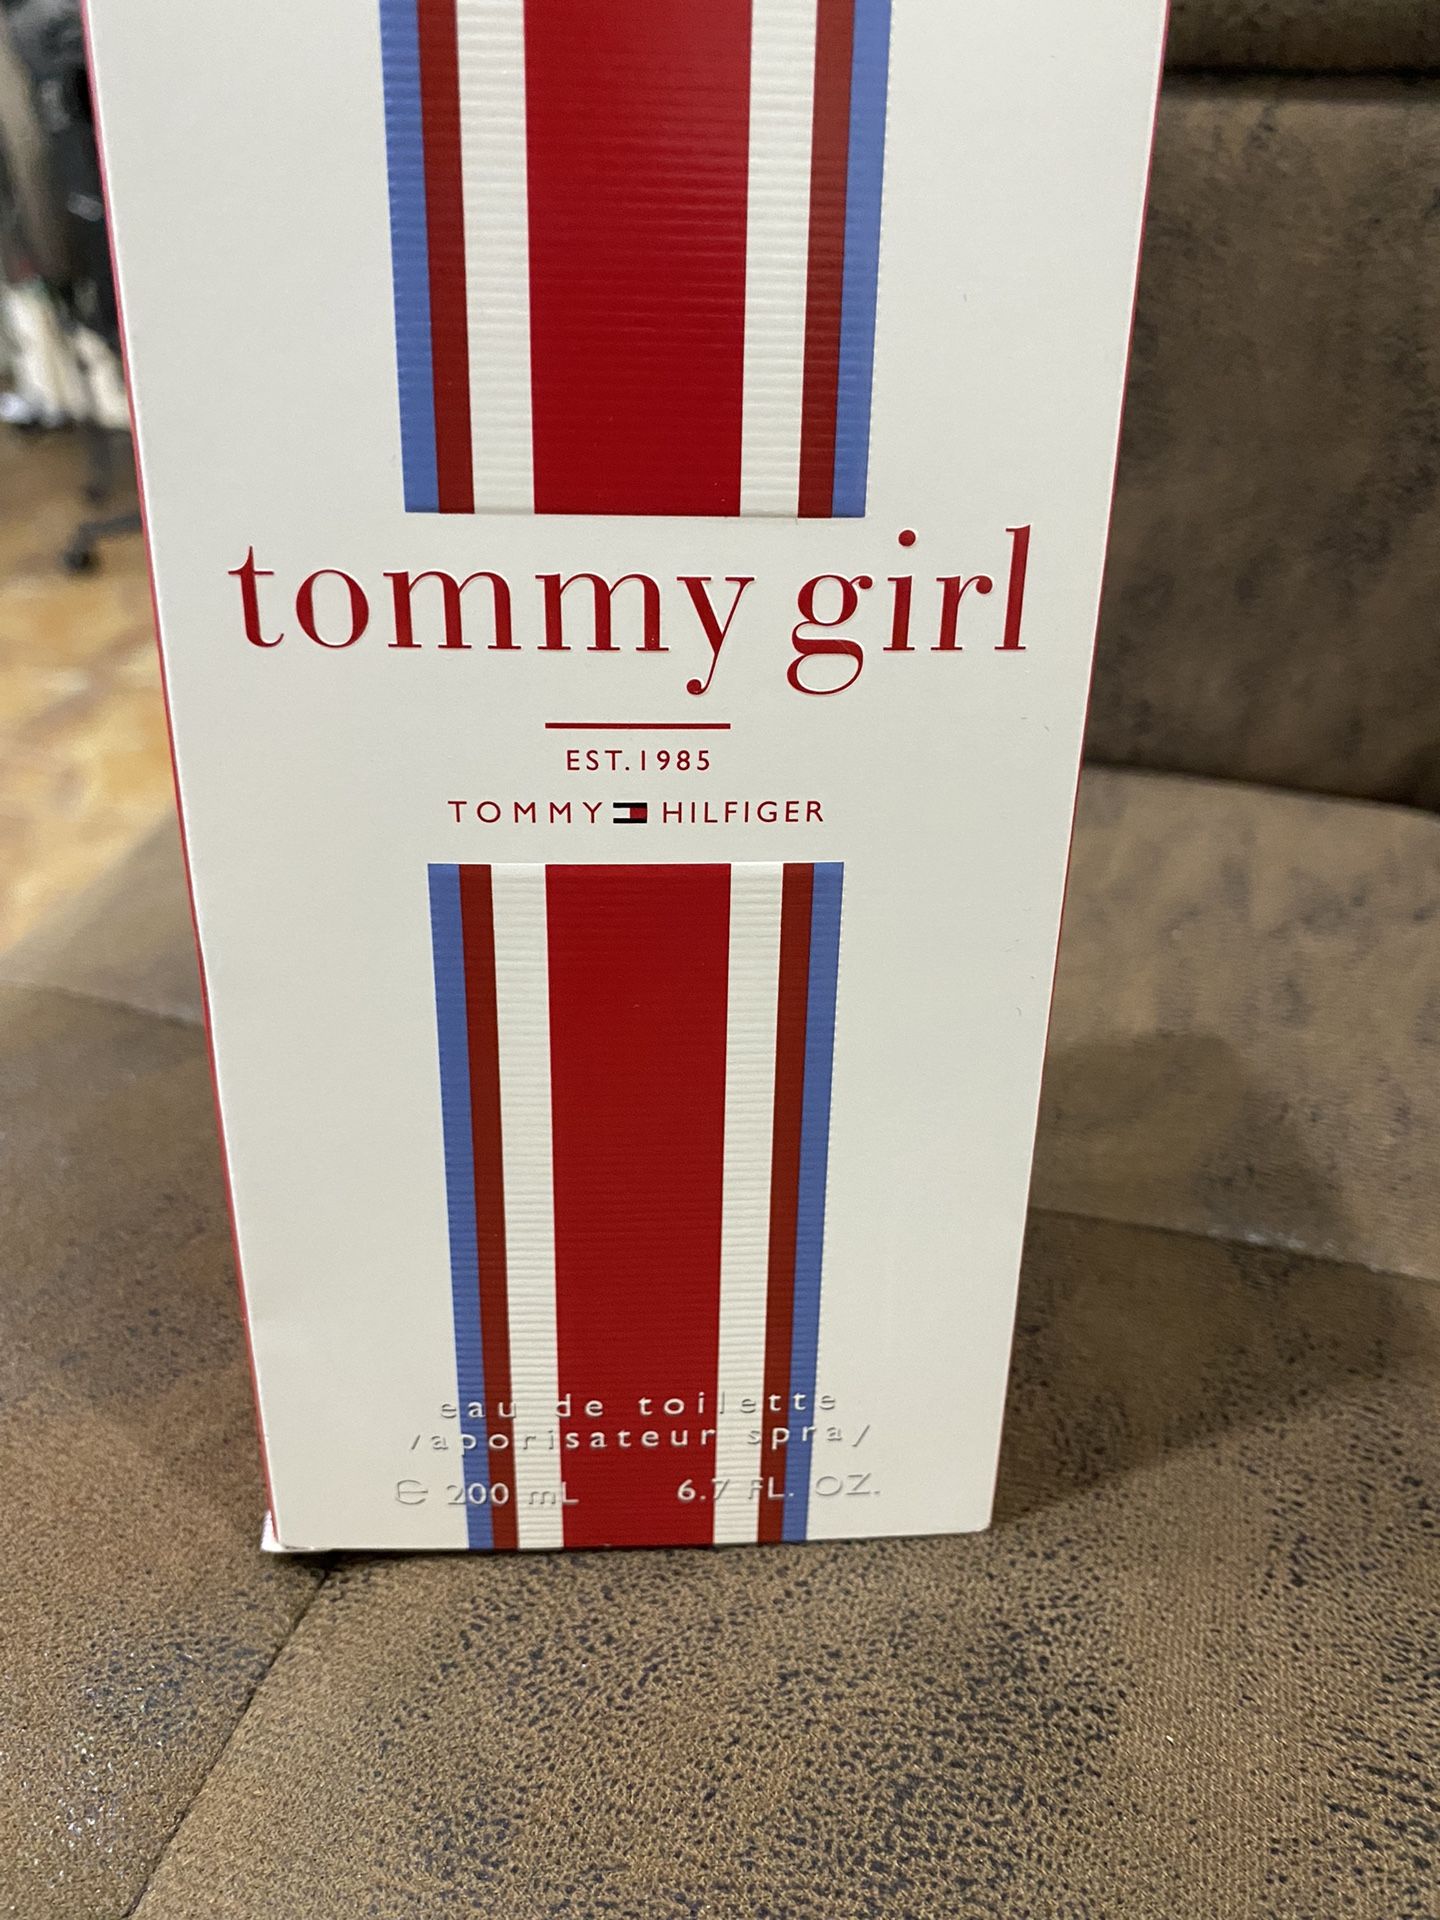 Tommy Hilfiger Perfume 